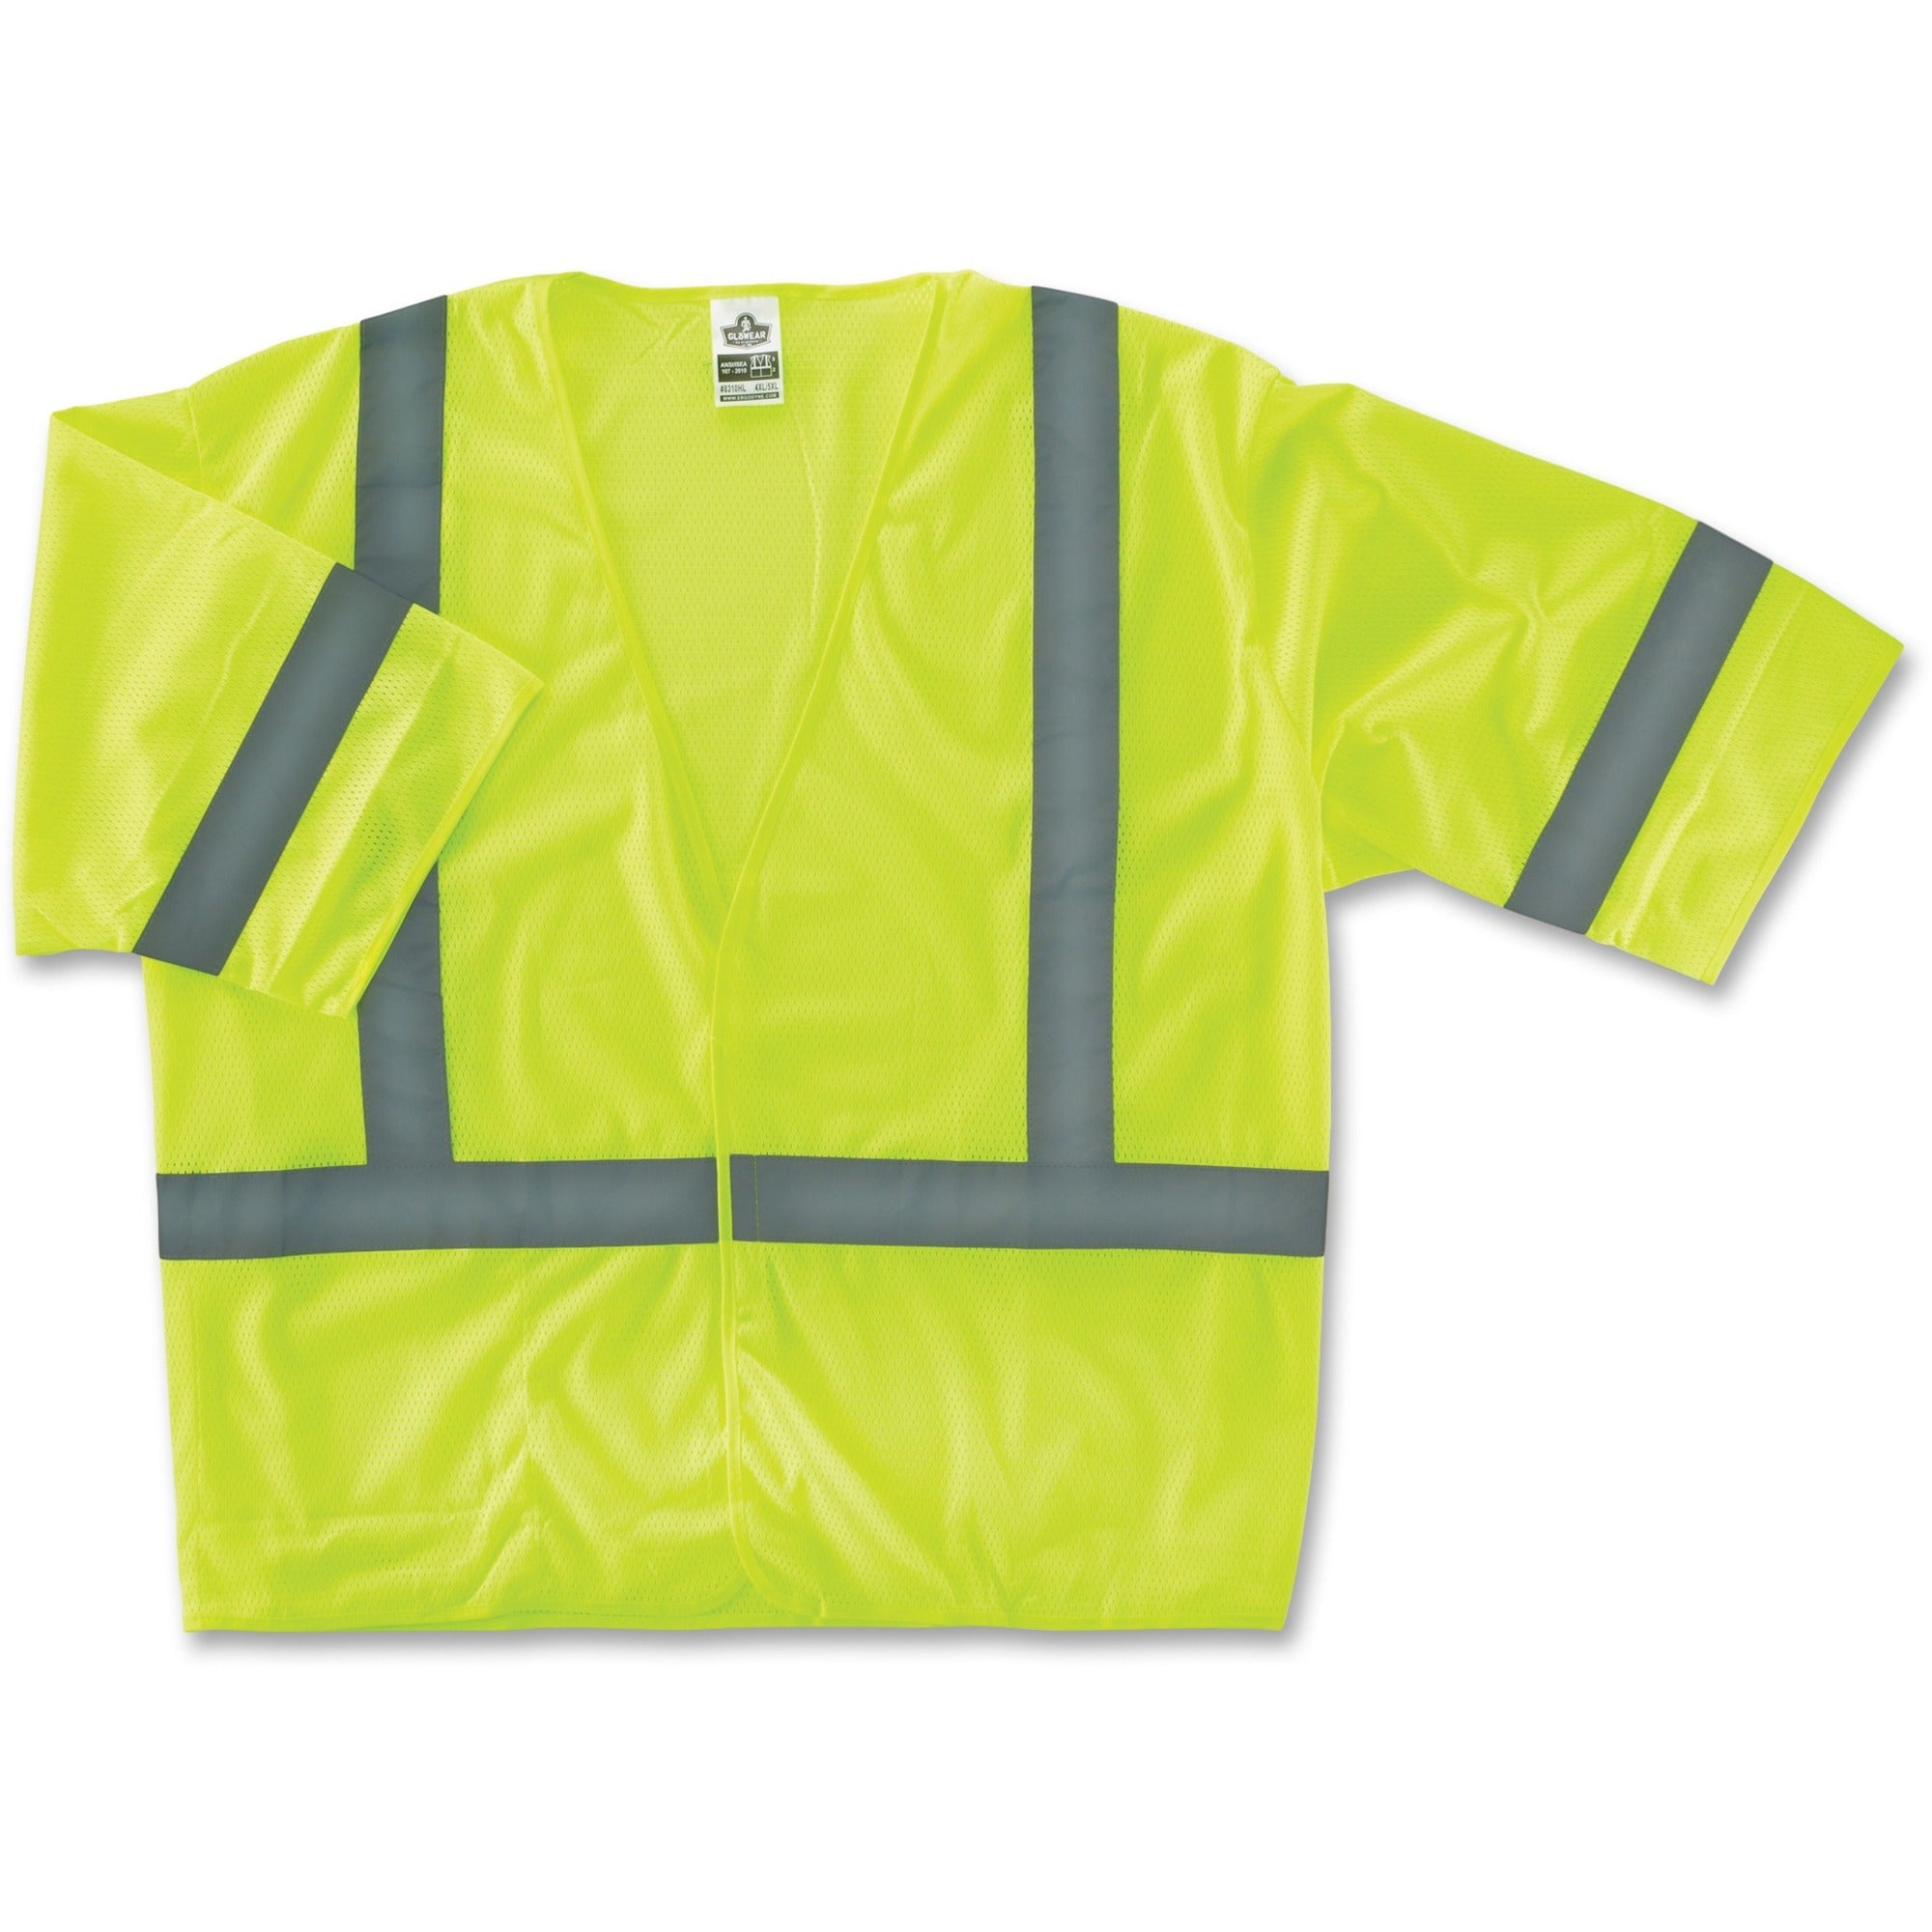 GloWear Class 3 Lime Economy Vest - Large/Extra Large Size - Lime - Reflective, Machine Washable, Lightweight, Pocket, Hook & Loop Closure - 1 Each - 